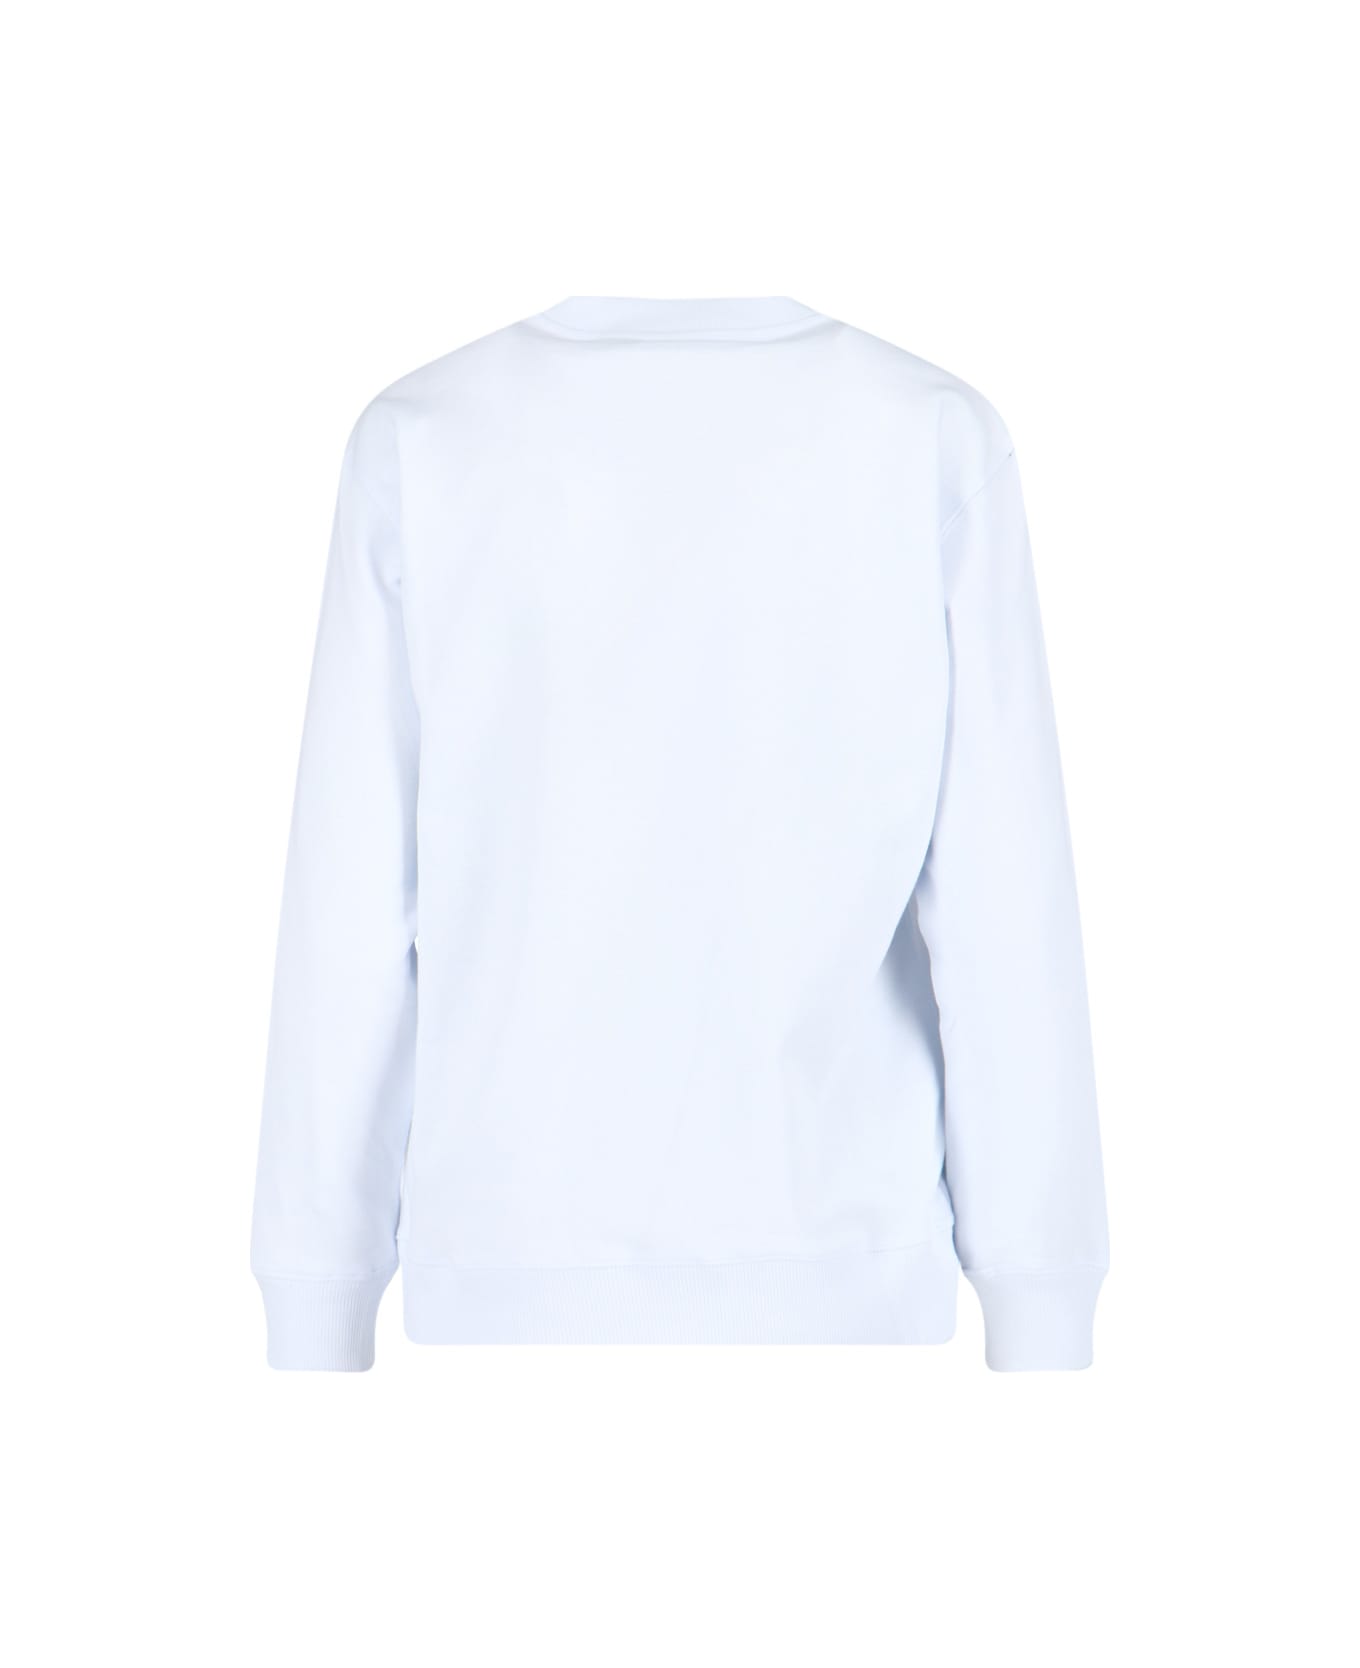 MSGM Logo Crewneck Sweatshirt - White フリース